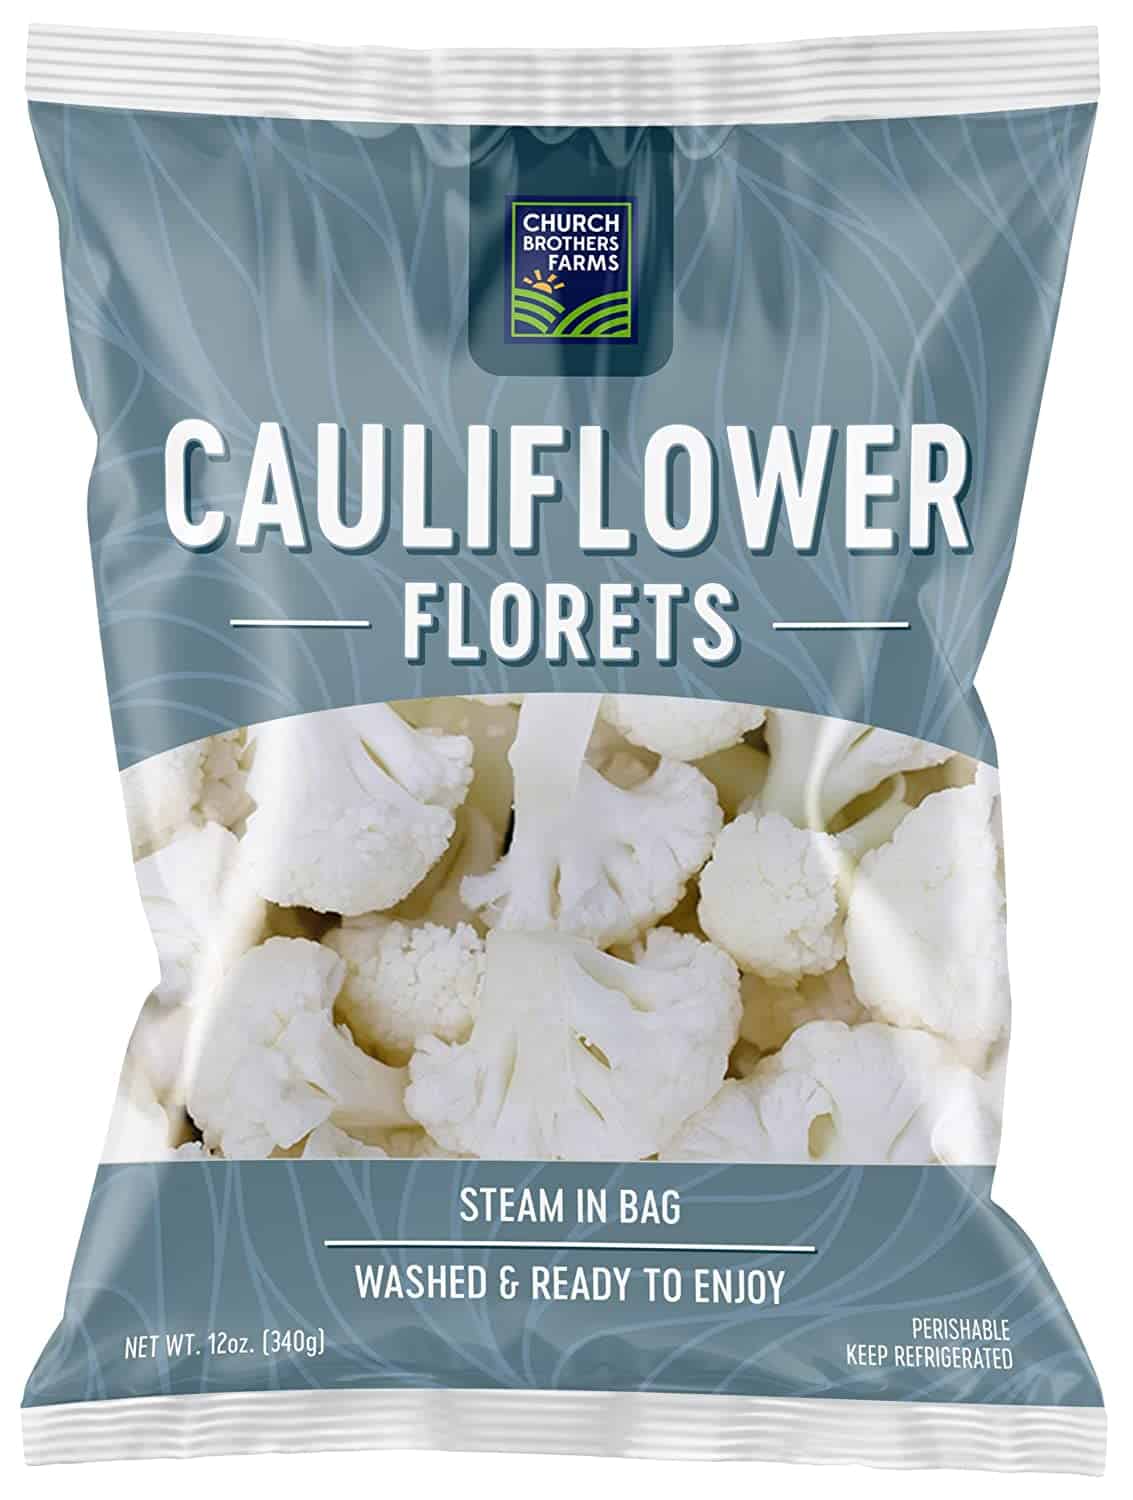 Cauliflower florets as a substitute for black beans